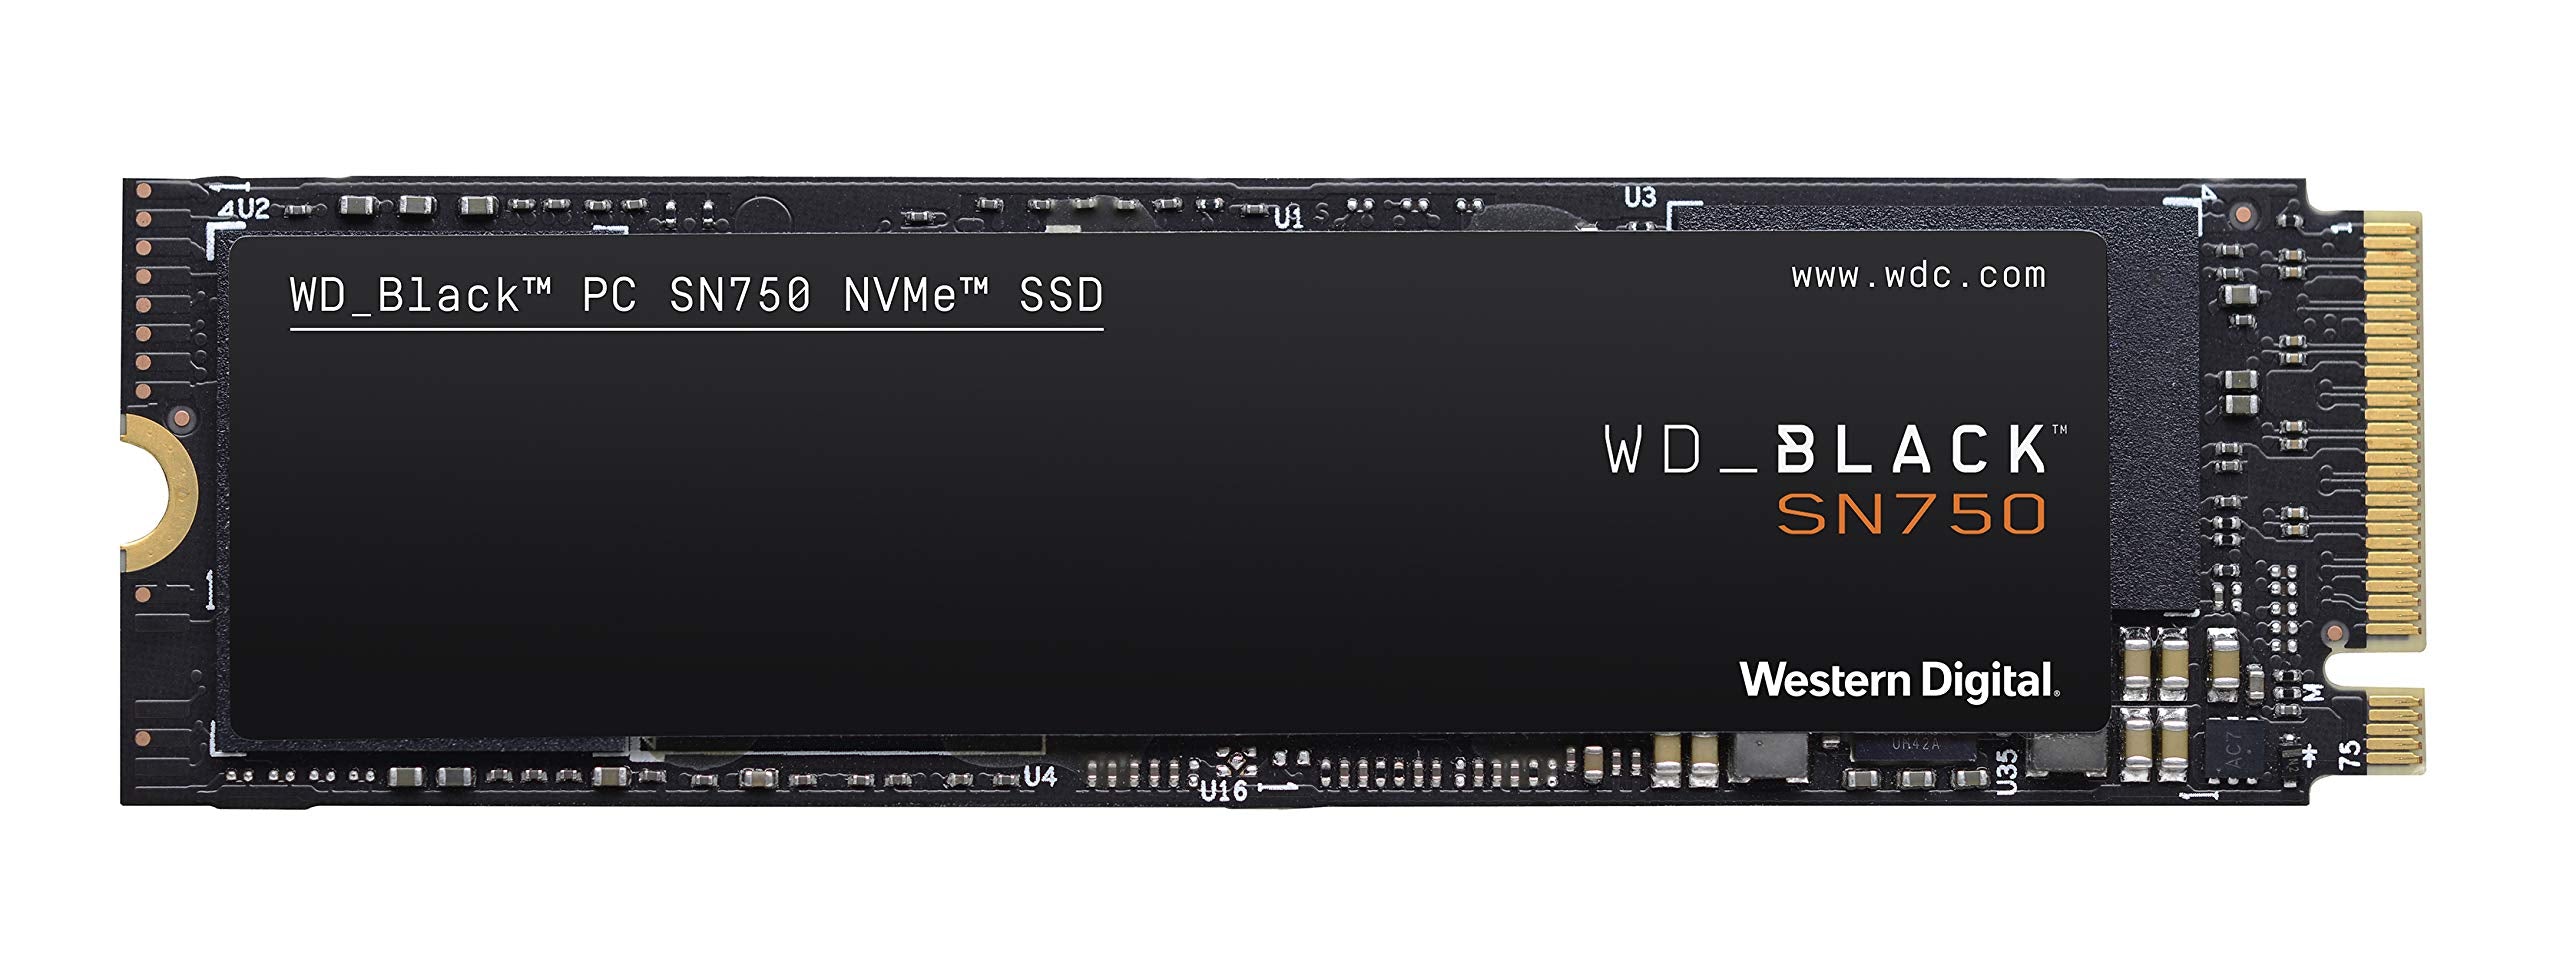 WD Black SN750 500GB  NVMe Internal Gaming SSD - Gen3 PCIe, M.2 2280, 3D NAND - WDS500G3X0C (Open Box, Like New)